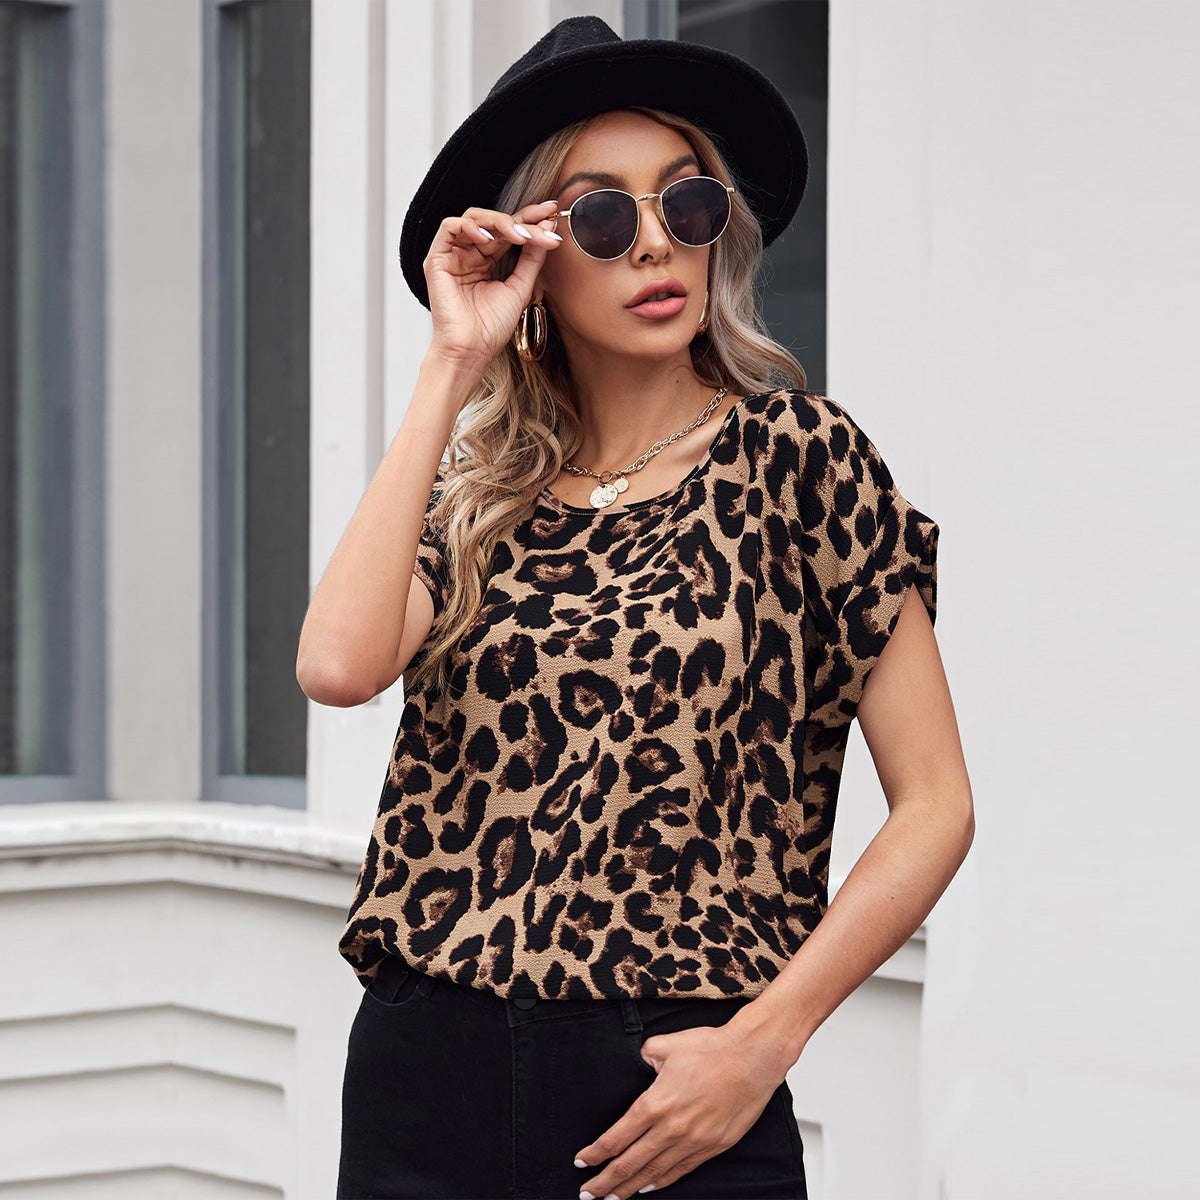 Stylish Leopard Prints Tops For Women & Girls